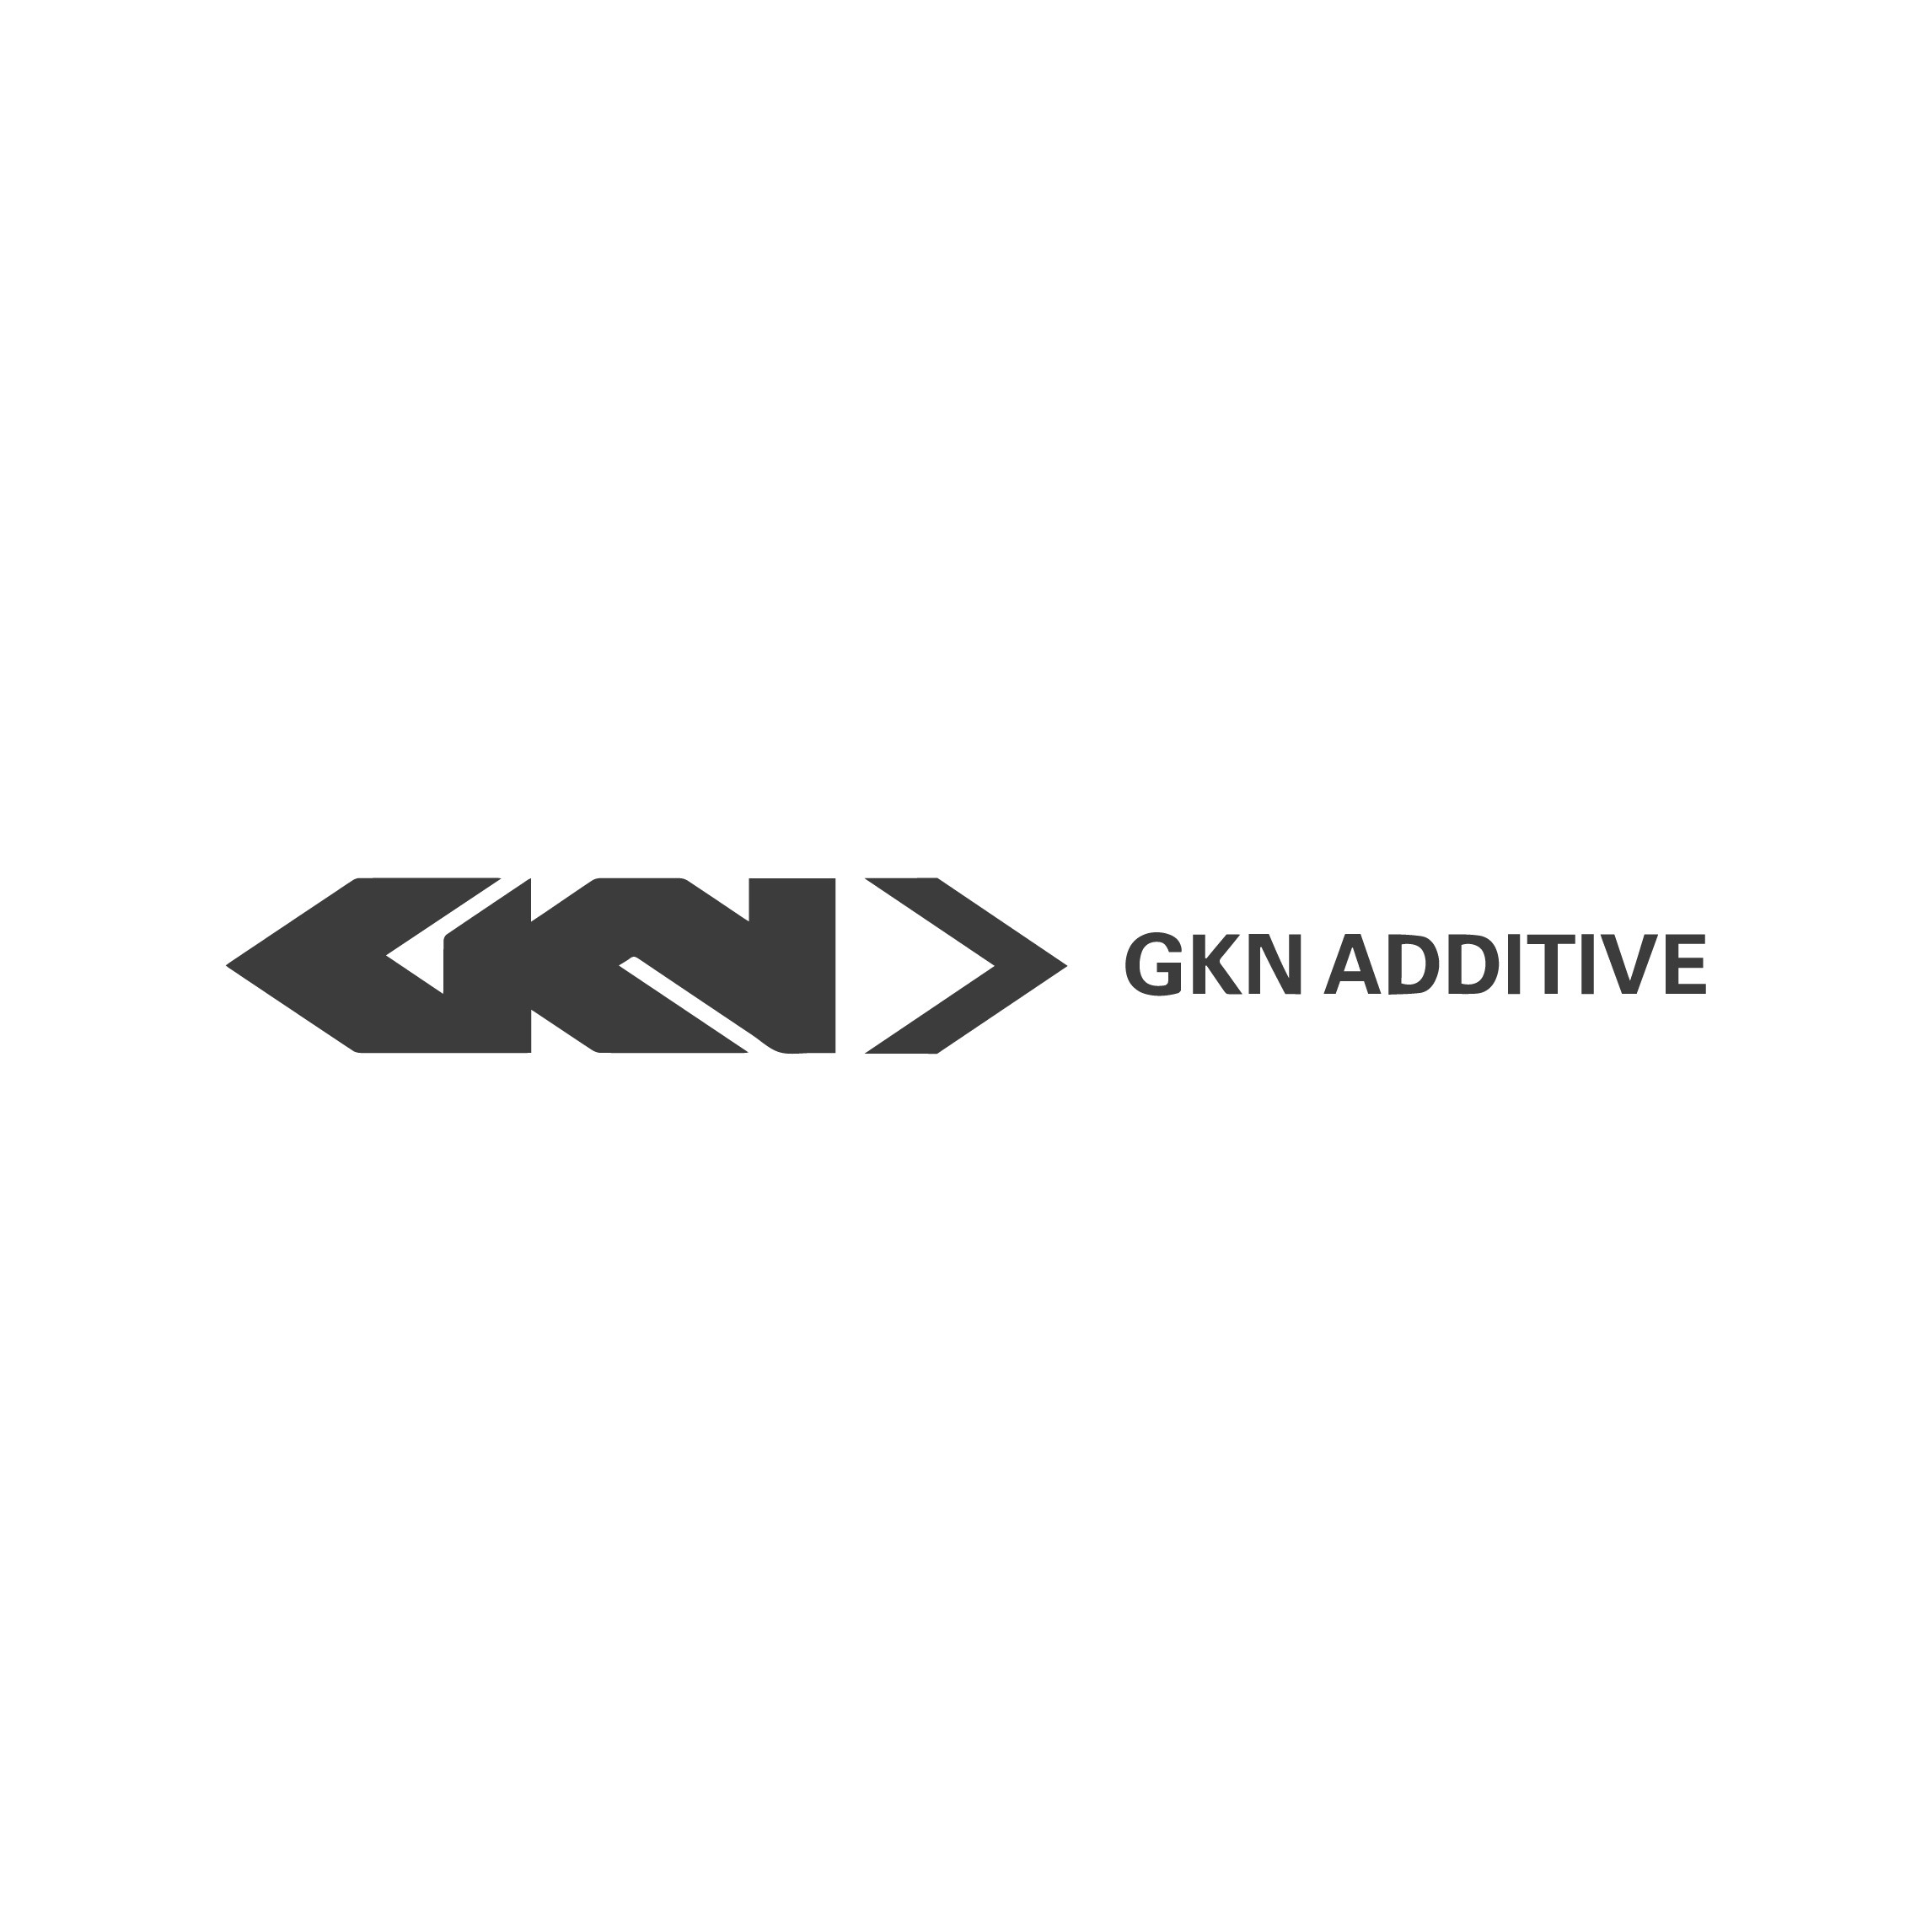 GKN Additive logo